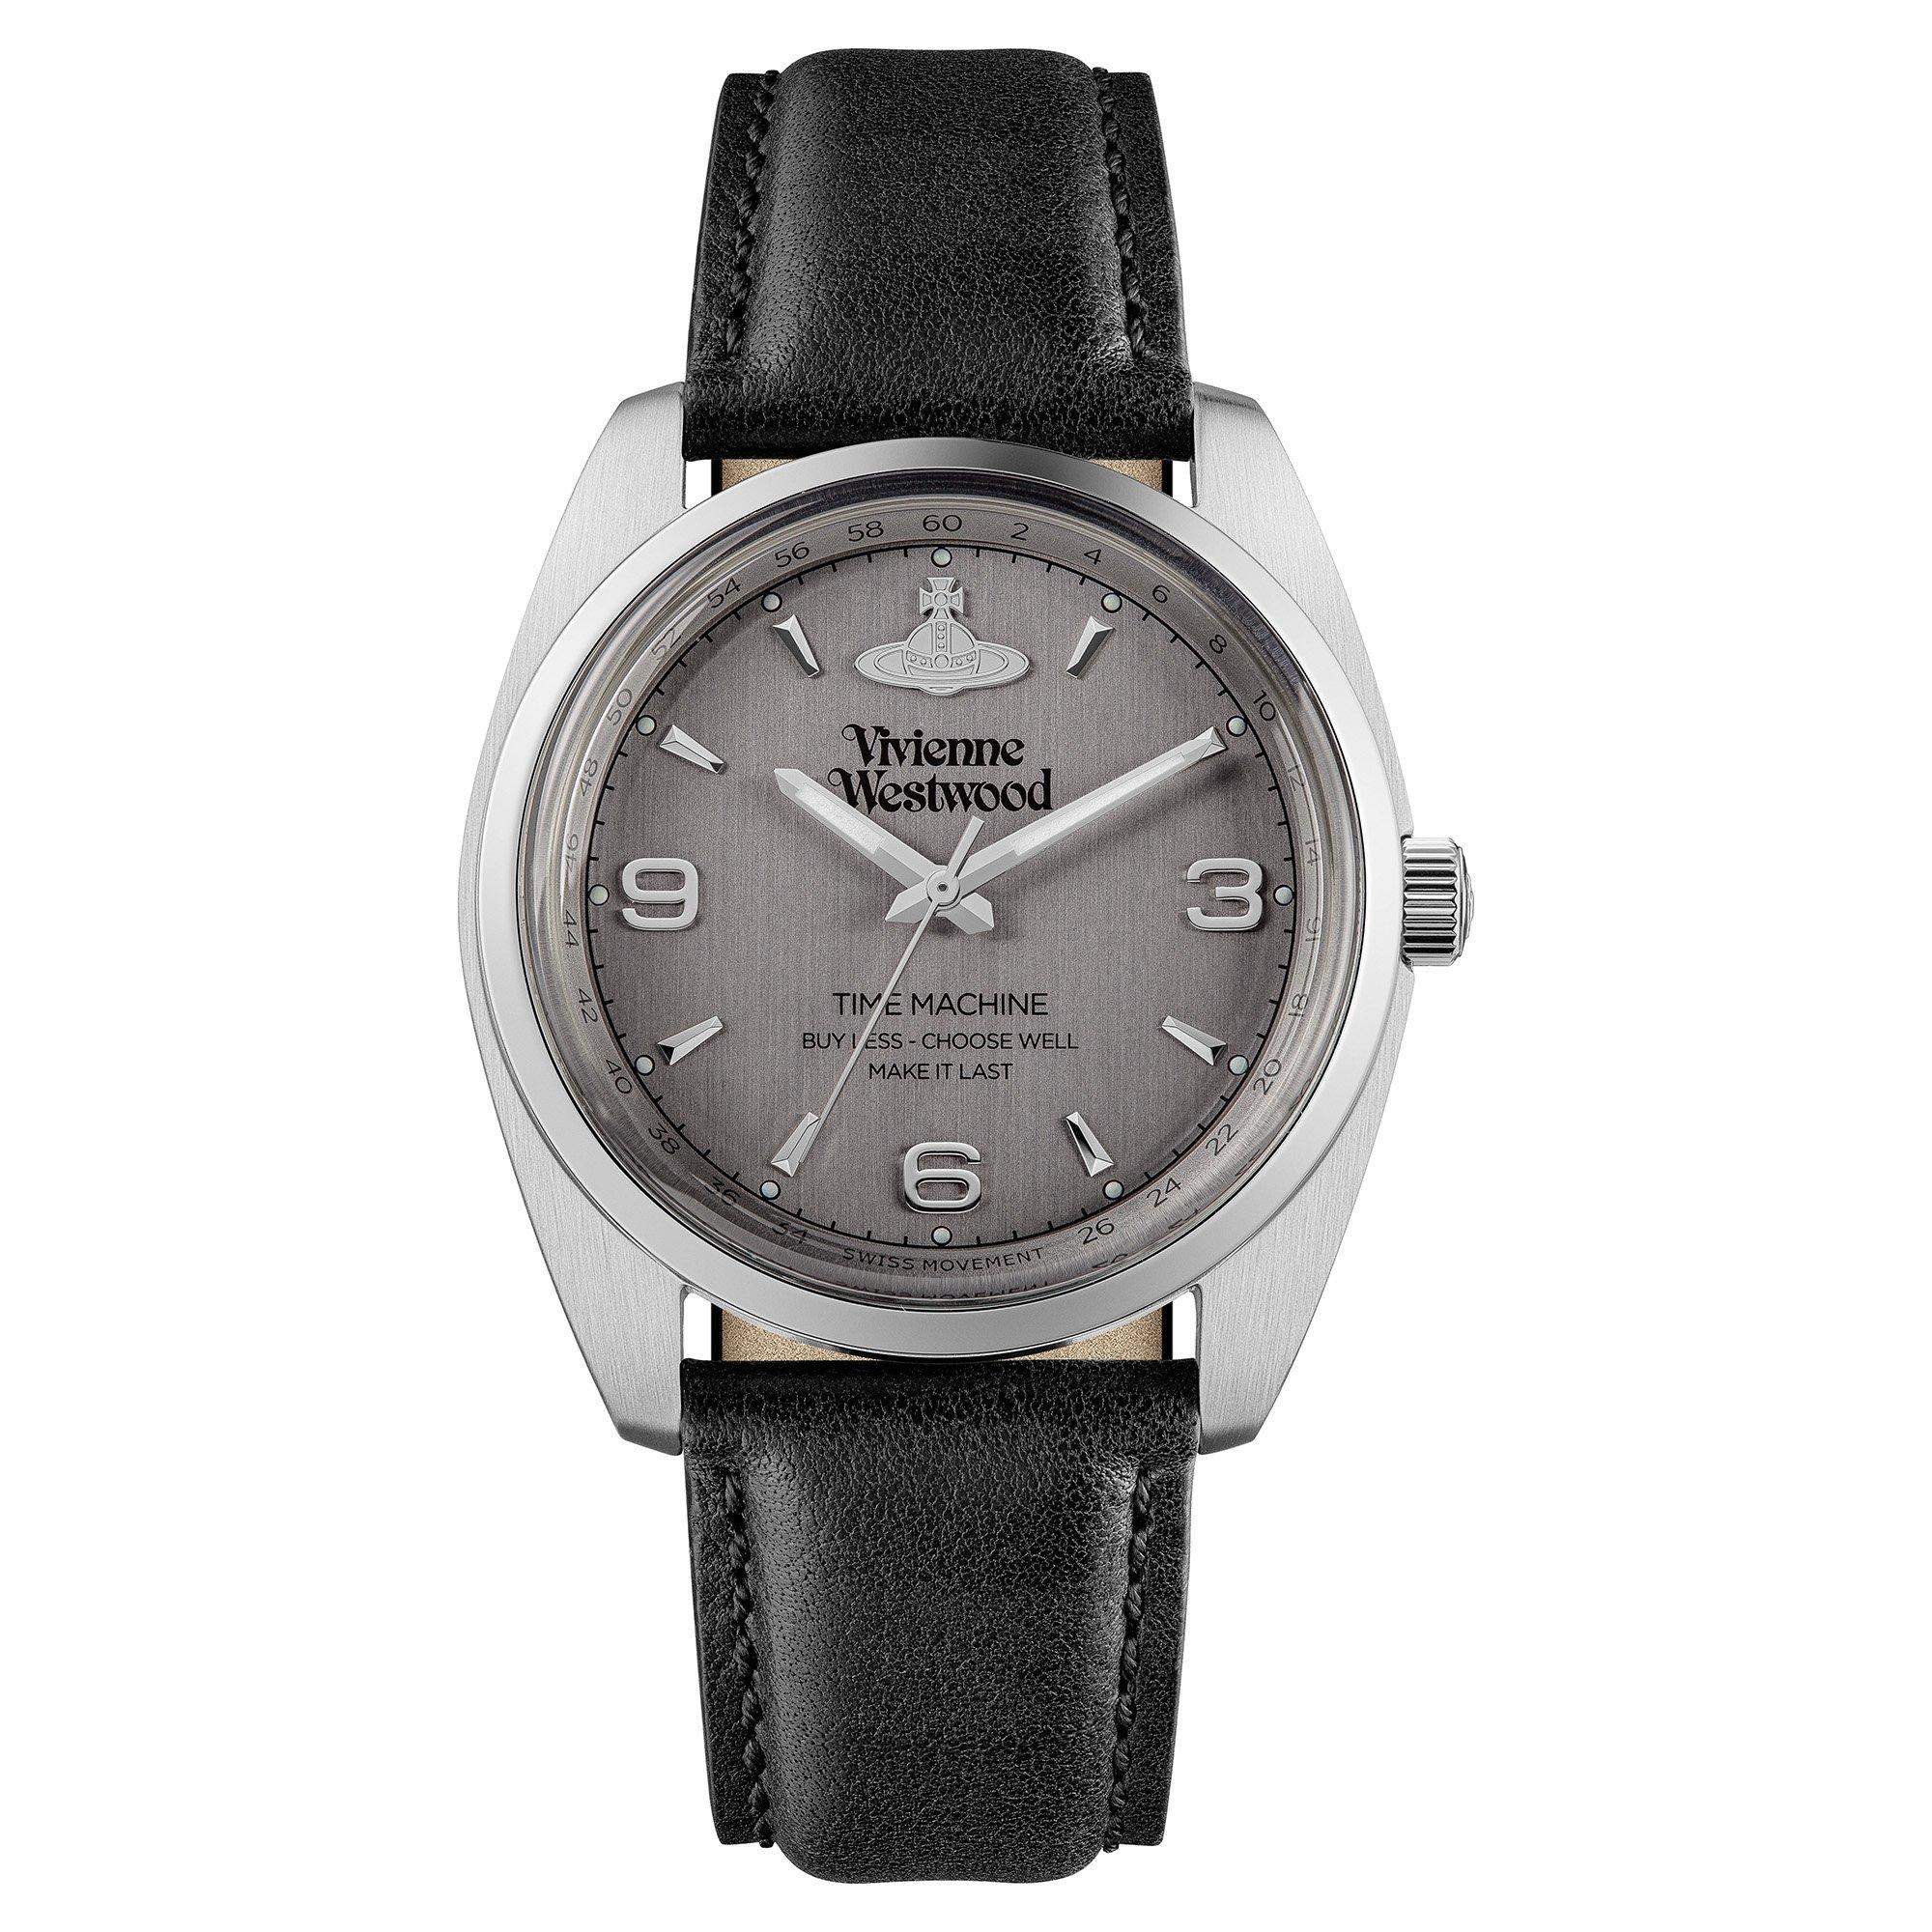 Vivienne Westwood Pennington Black Leather Stainless Steel Quartz Watch